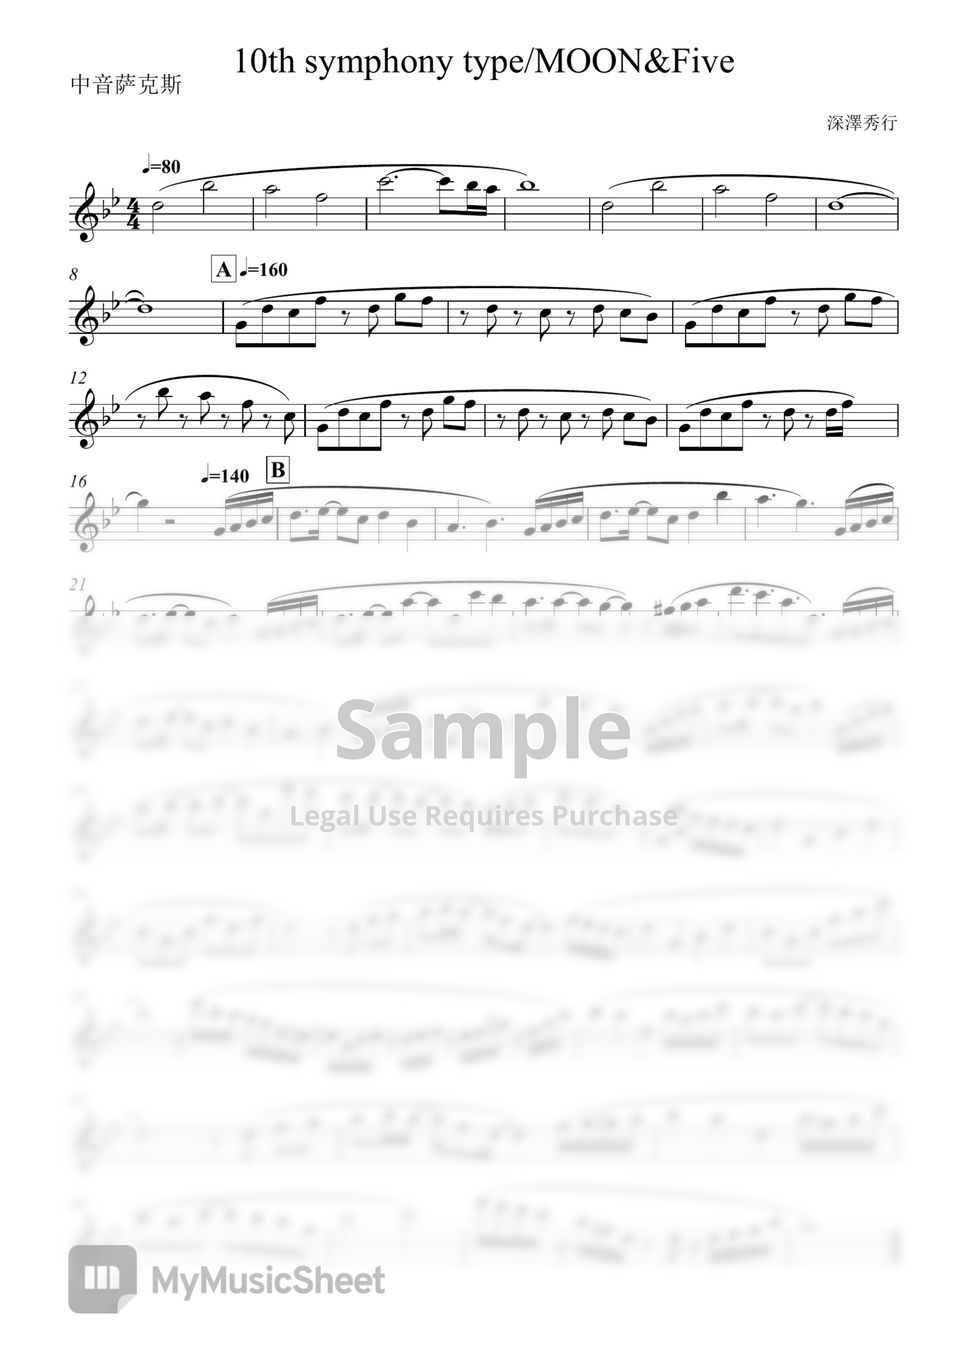 Hideyuki Fukasawa - 10th symphony type MOON&Five (For Alto Sax) by AlanSXin